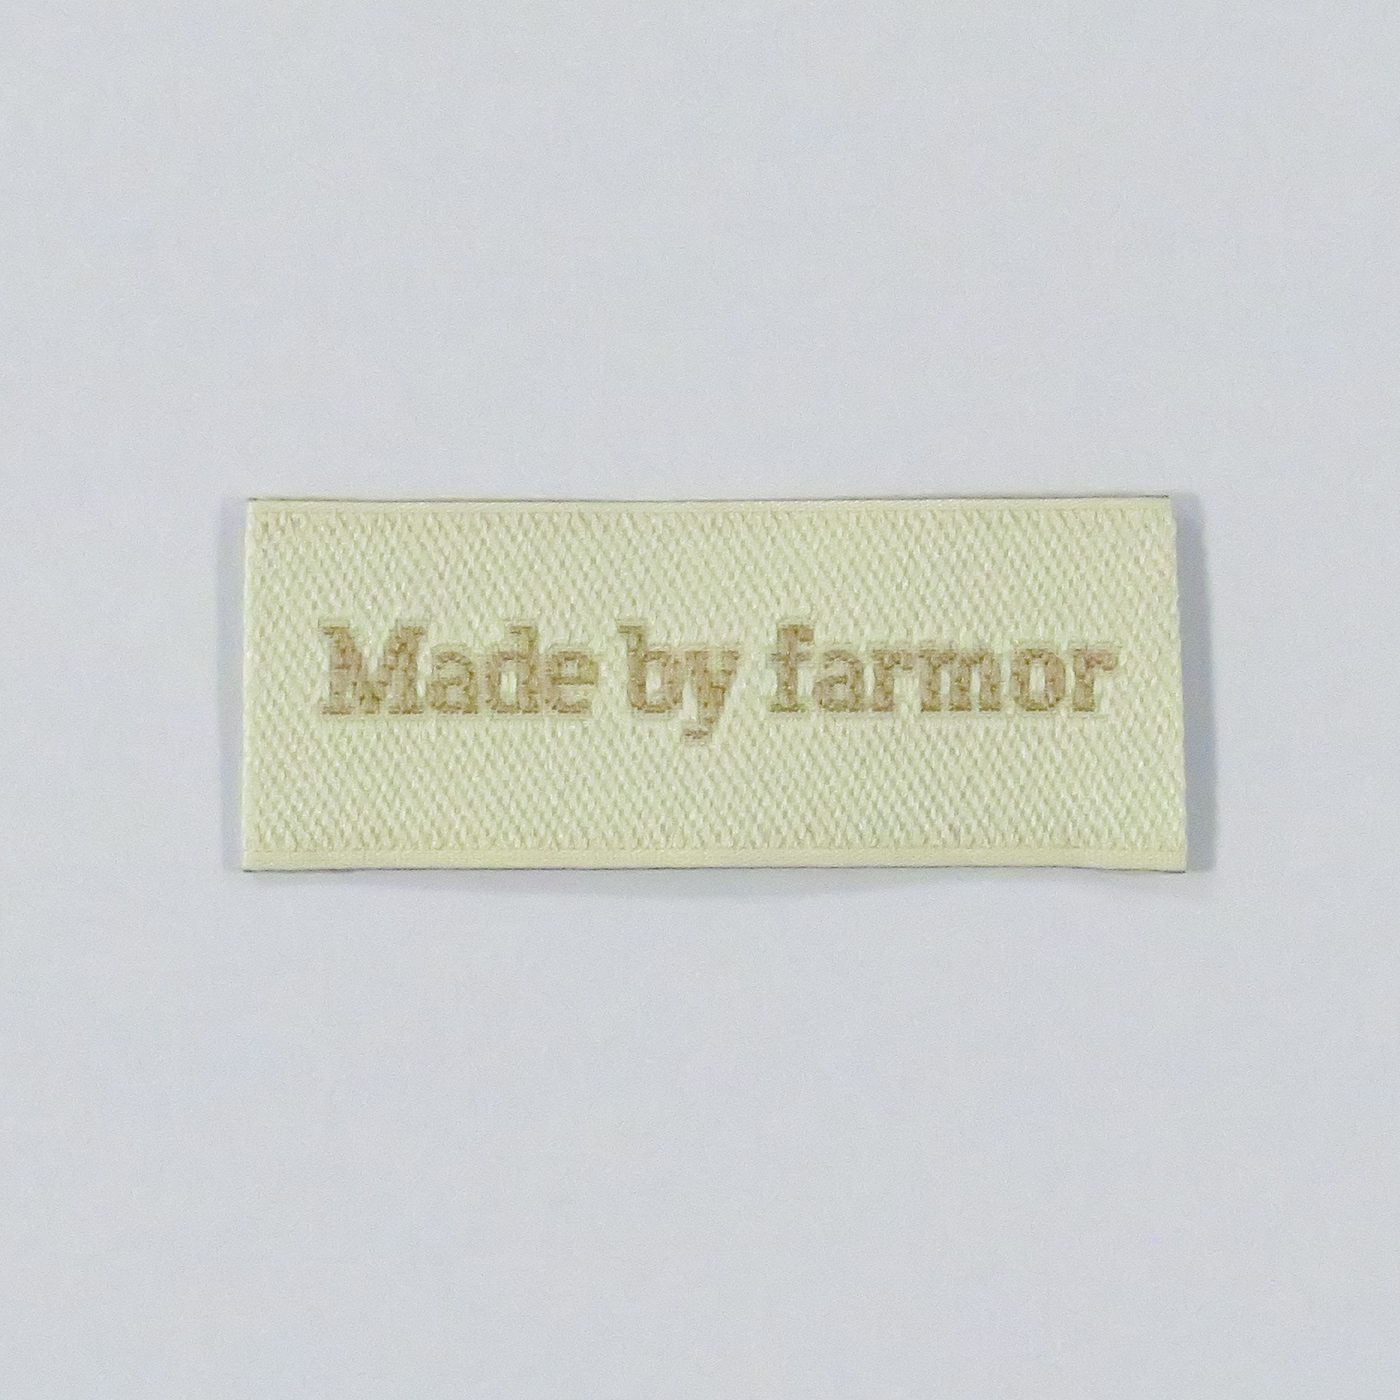 Made by Farmor